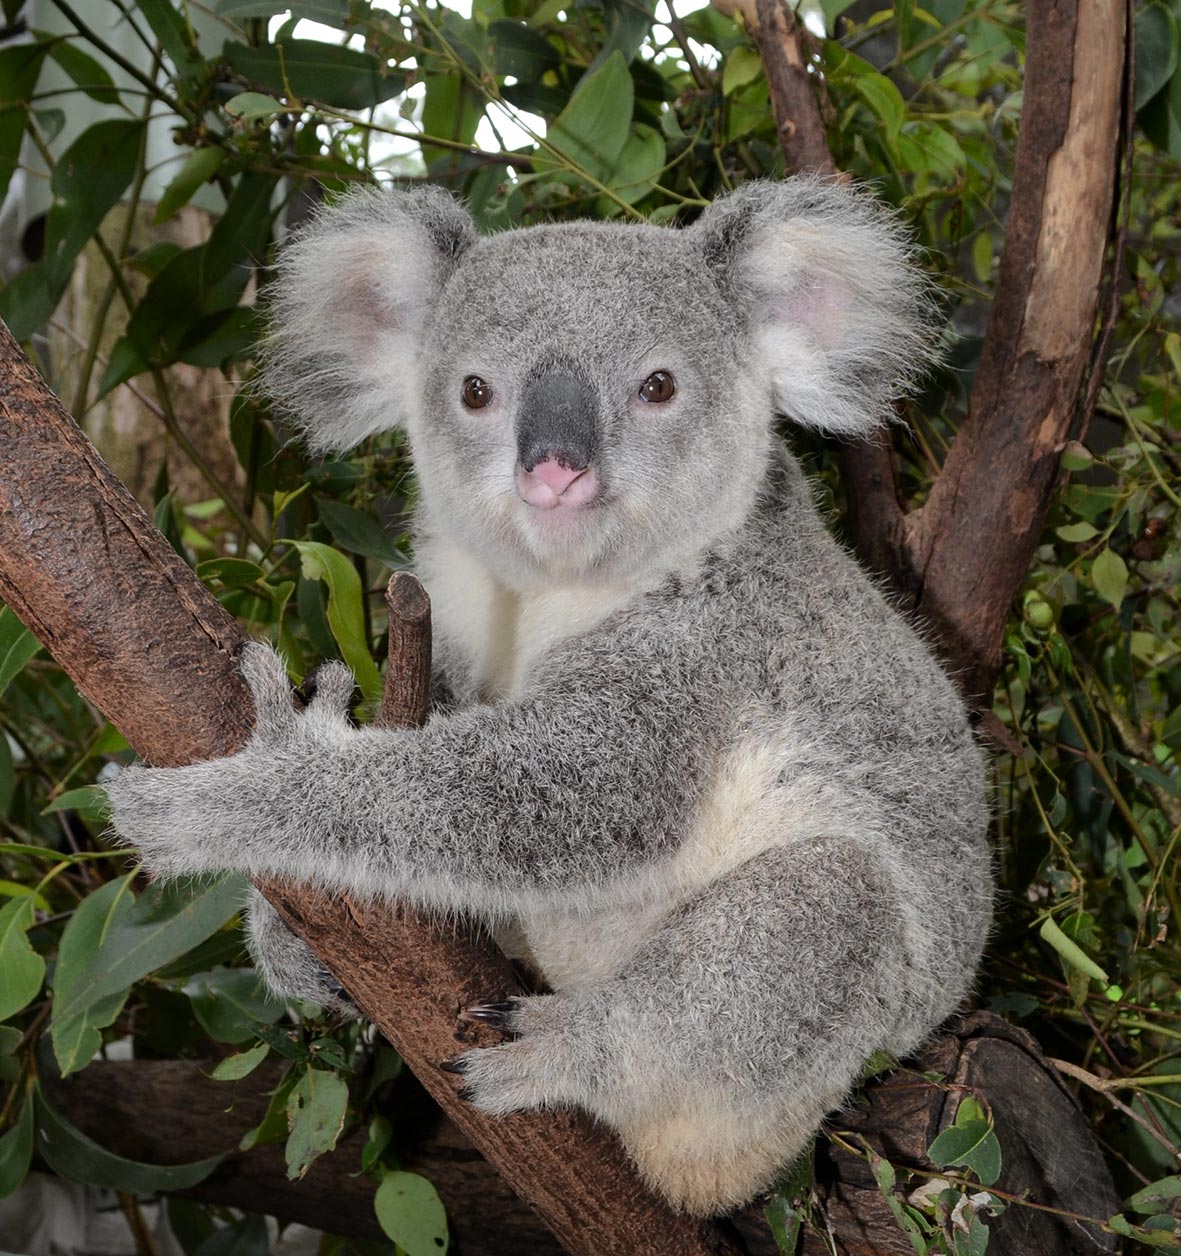 Adopt a Koala  Symbolic Adoptions from WWF